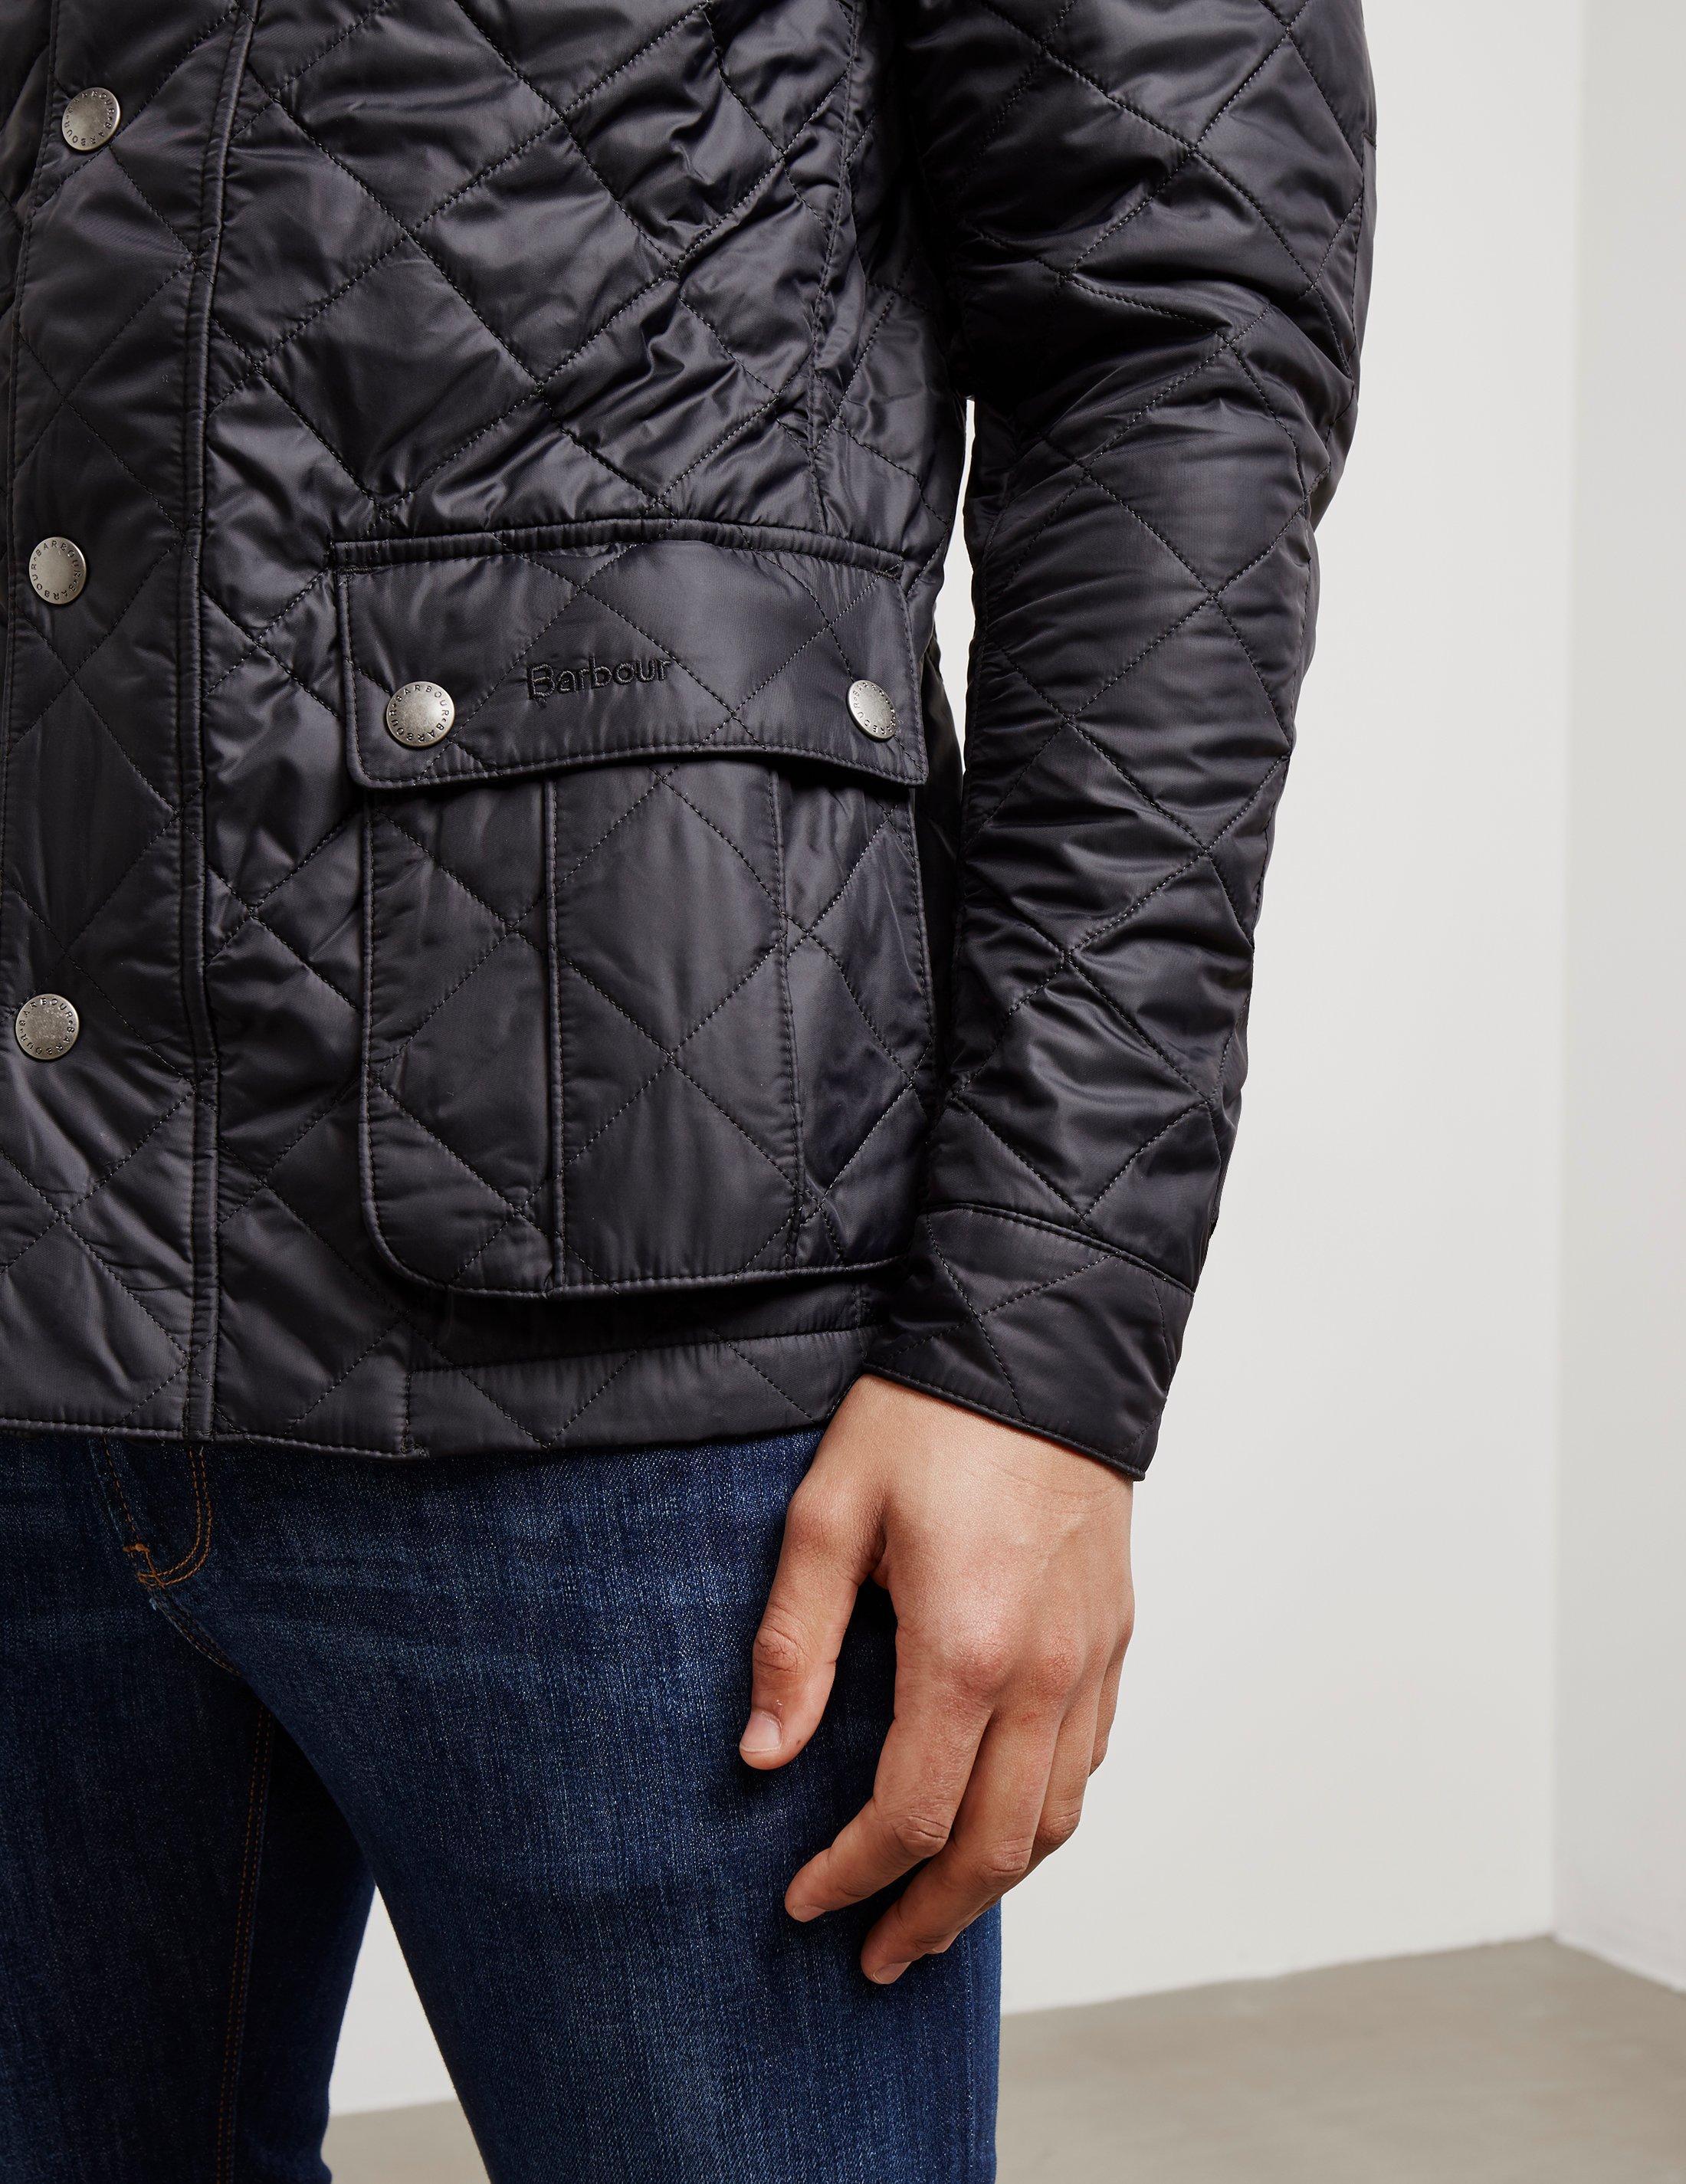 Barbour Cotton Ariel Quilted Jacket Black for Men - Save 47% | Lyst